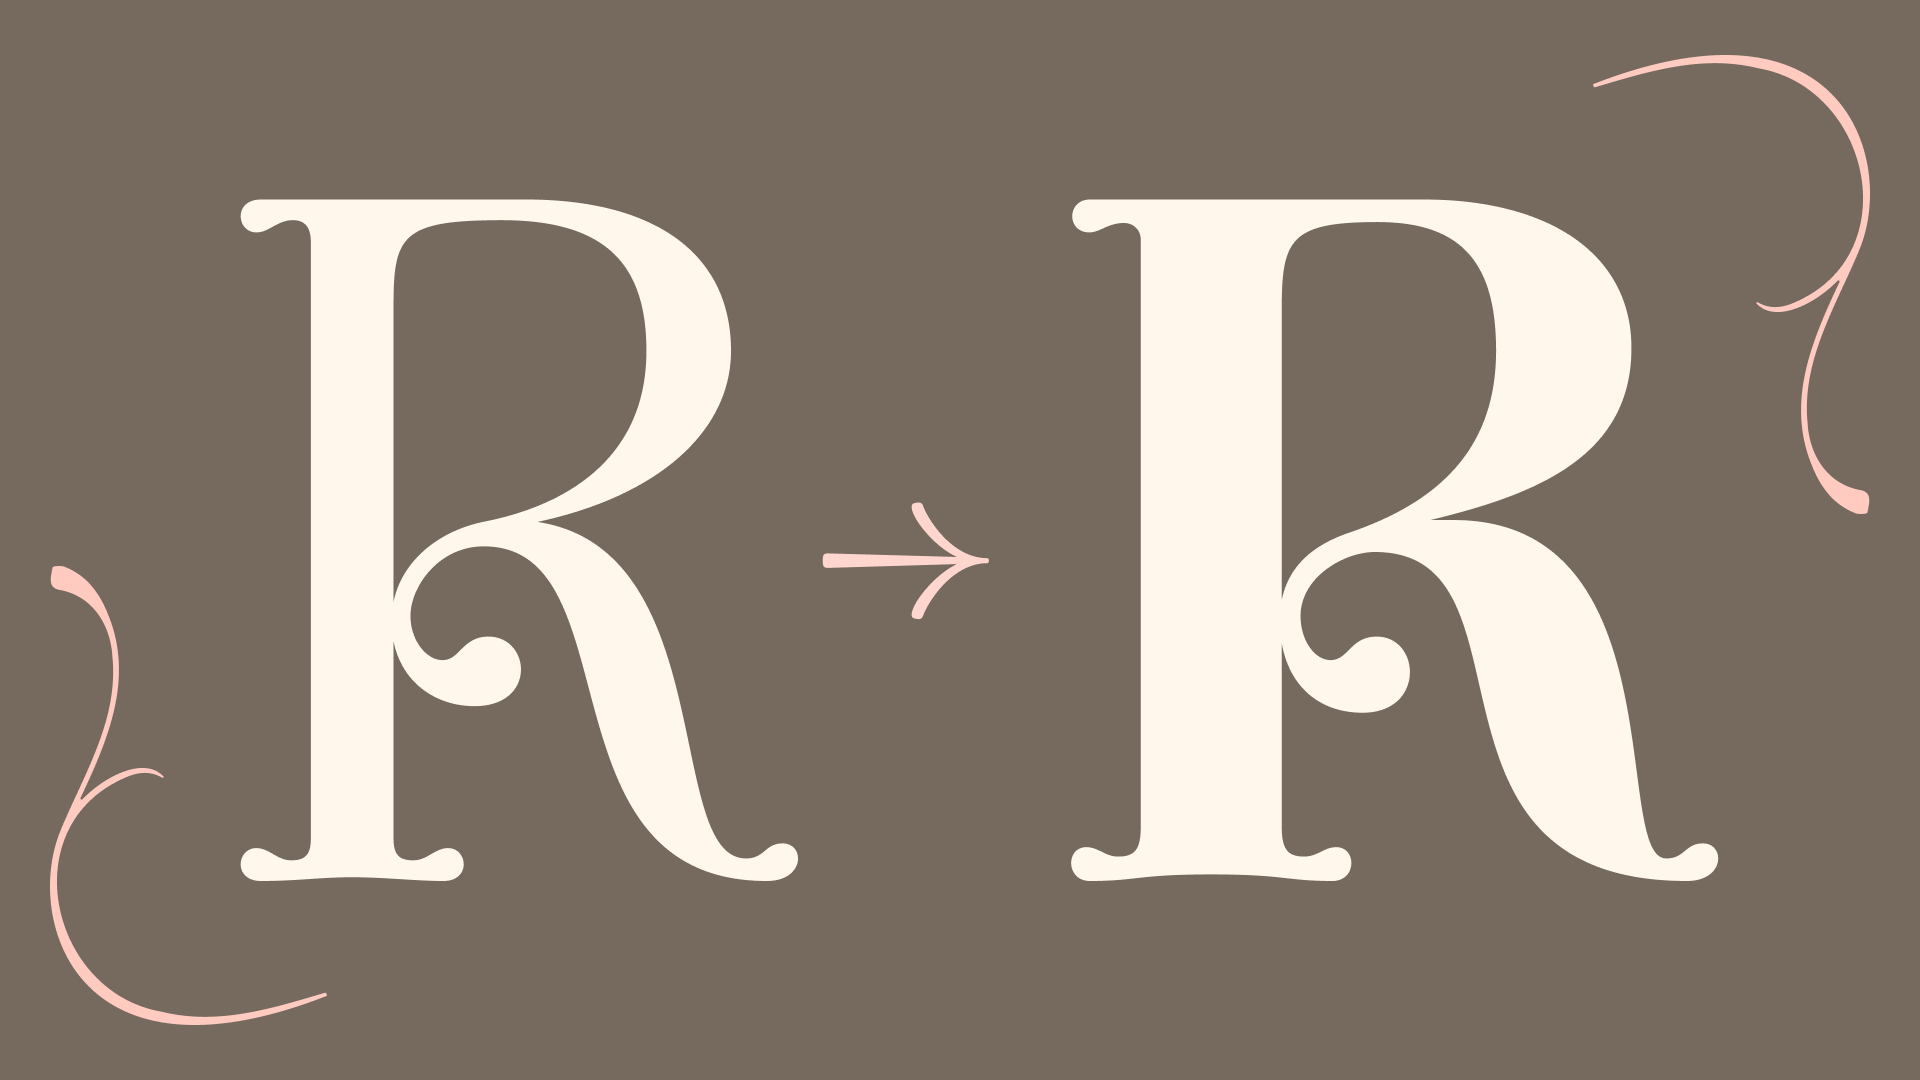 Capital "R" set in Regular and Black.